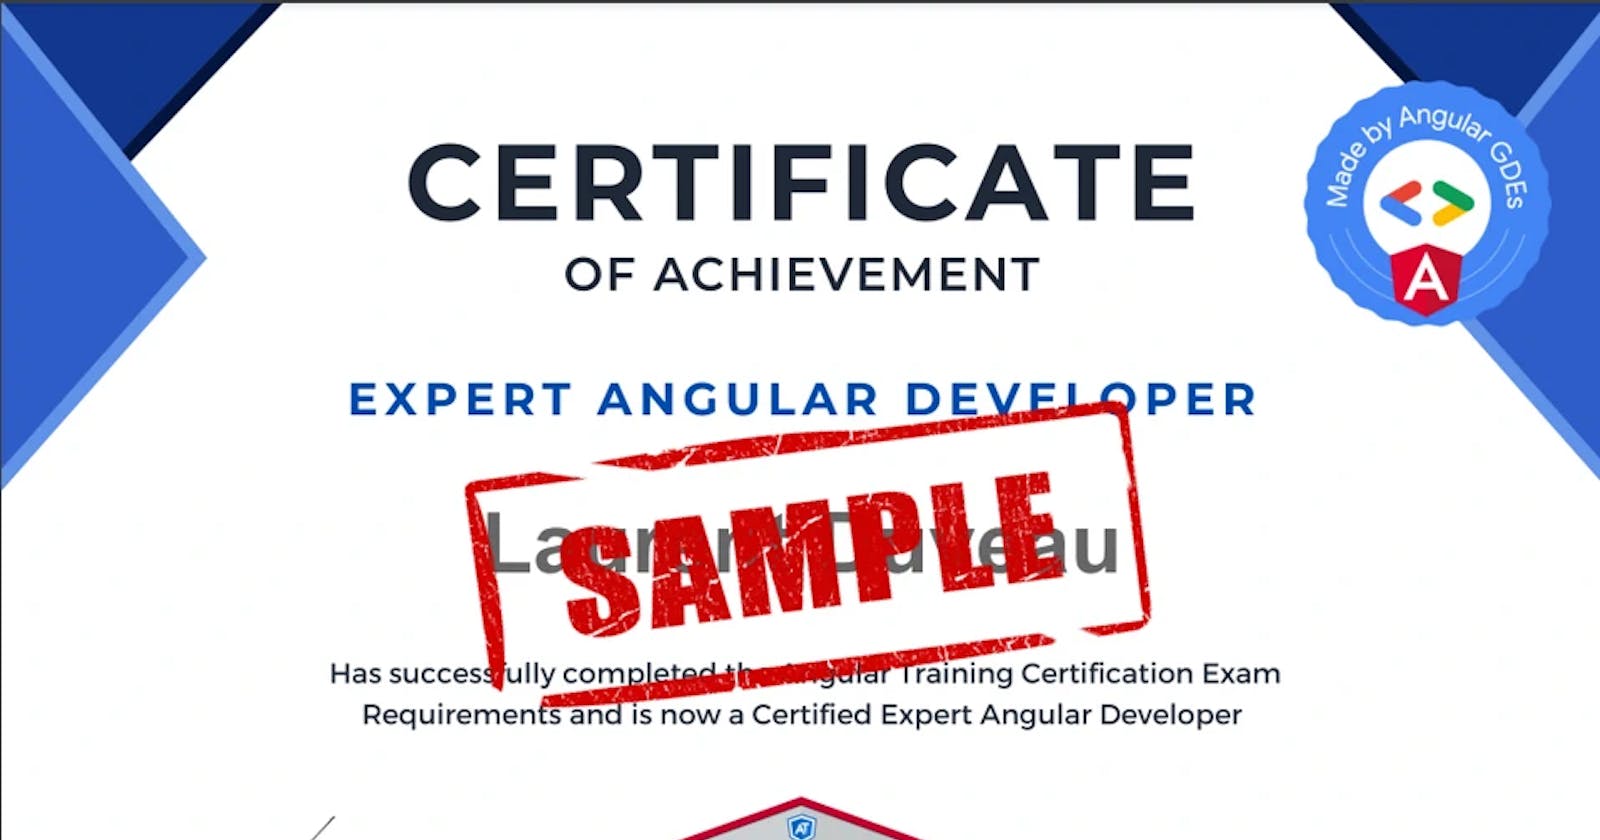 Become a Certified Angular Developer!